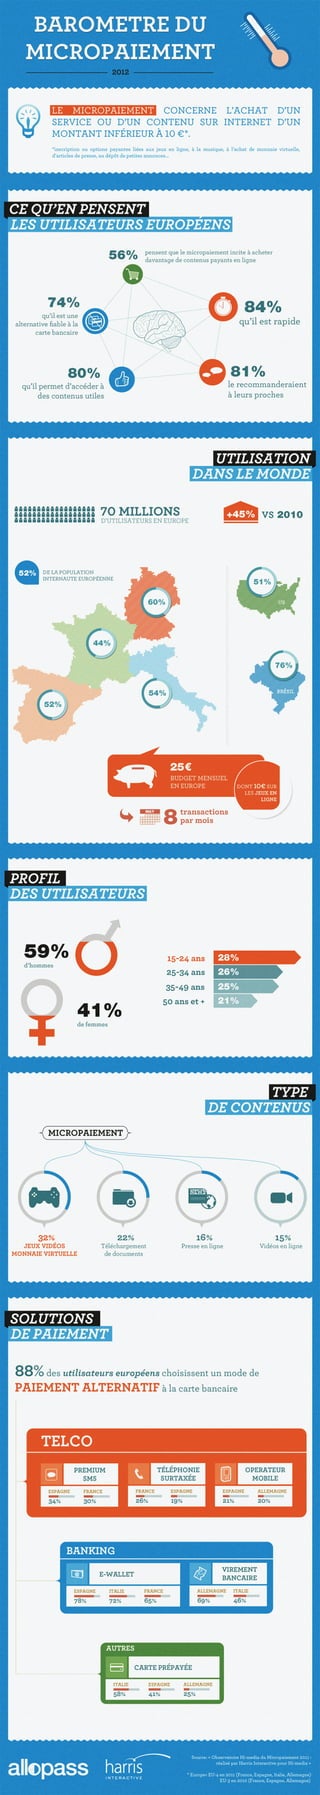 HiMedia infographie barometre du micropaiement 2012